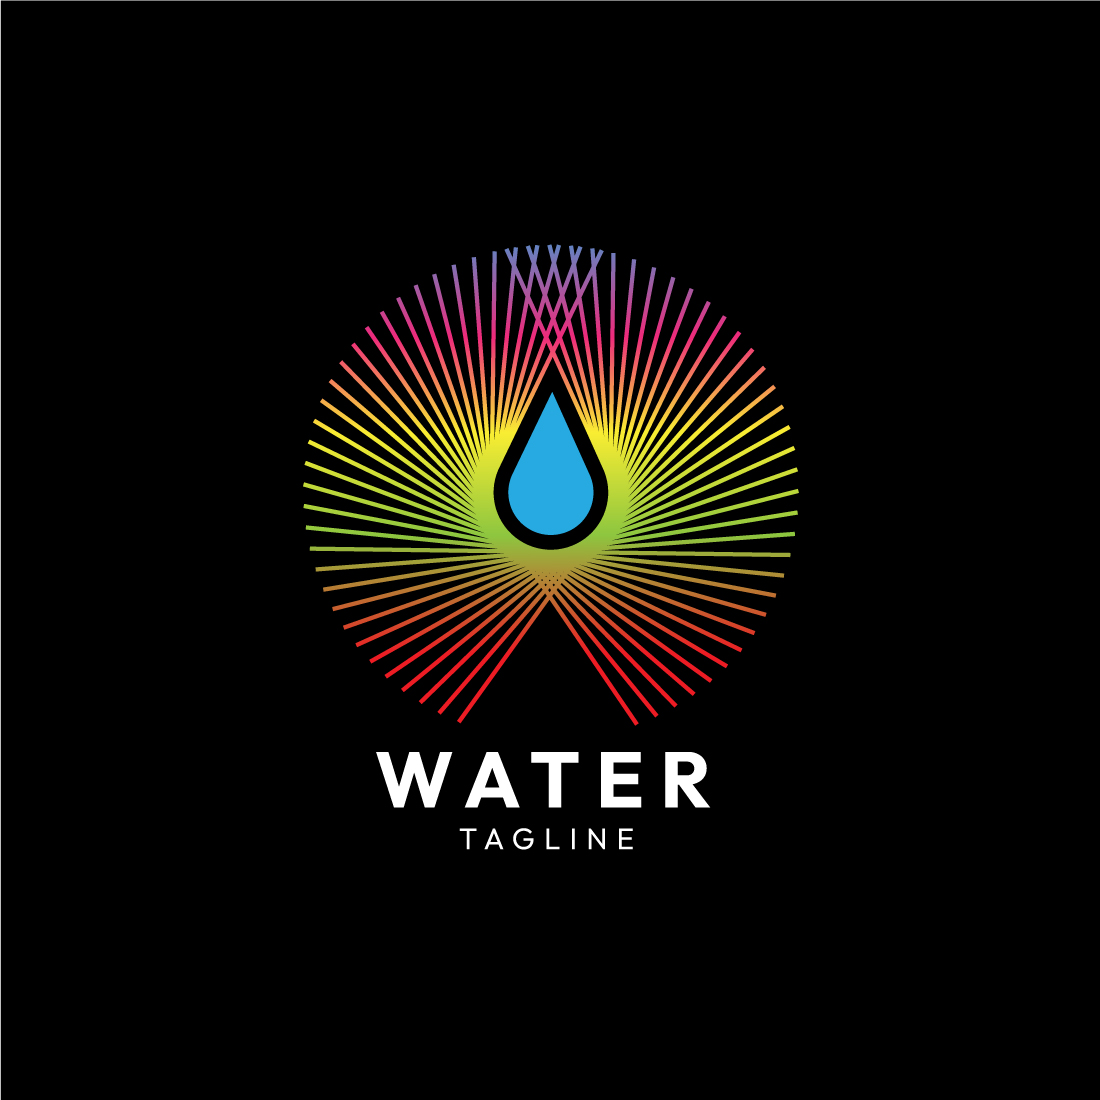 Unique Water Line Art Logo Design - Perfect for Master Bundles cover image.